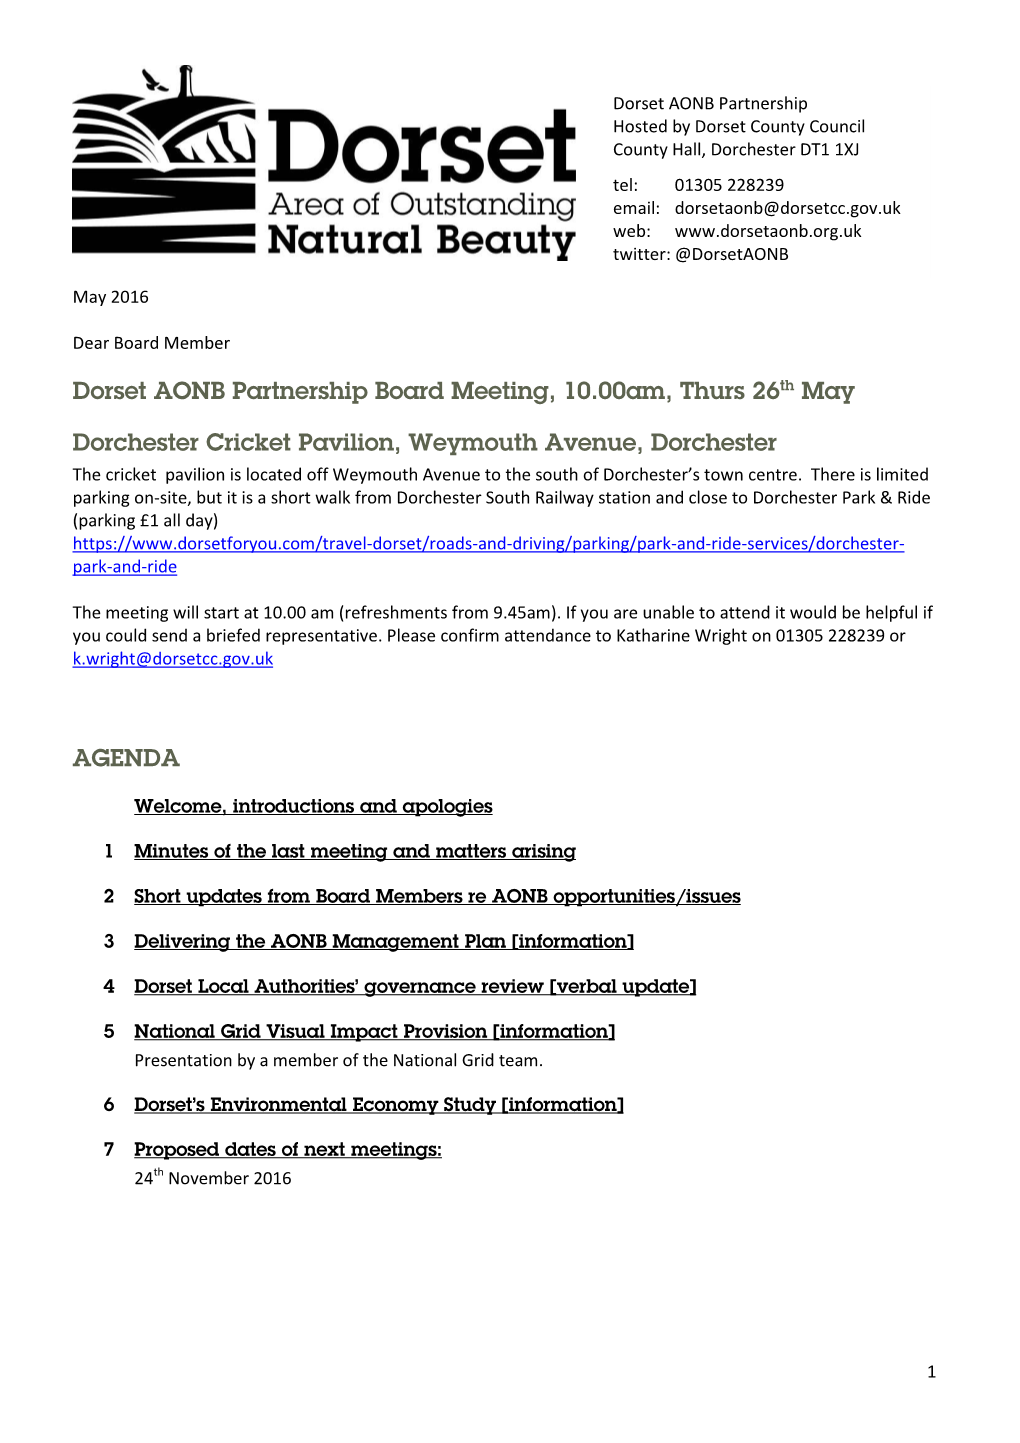 Dorset AONB Partnership Board Meeting, 10.00Am, Thurs 26Th May